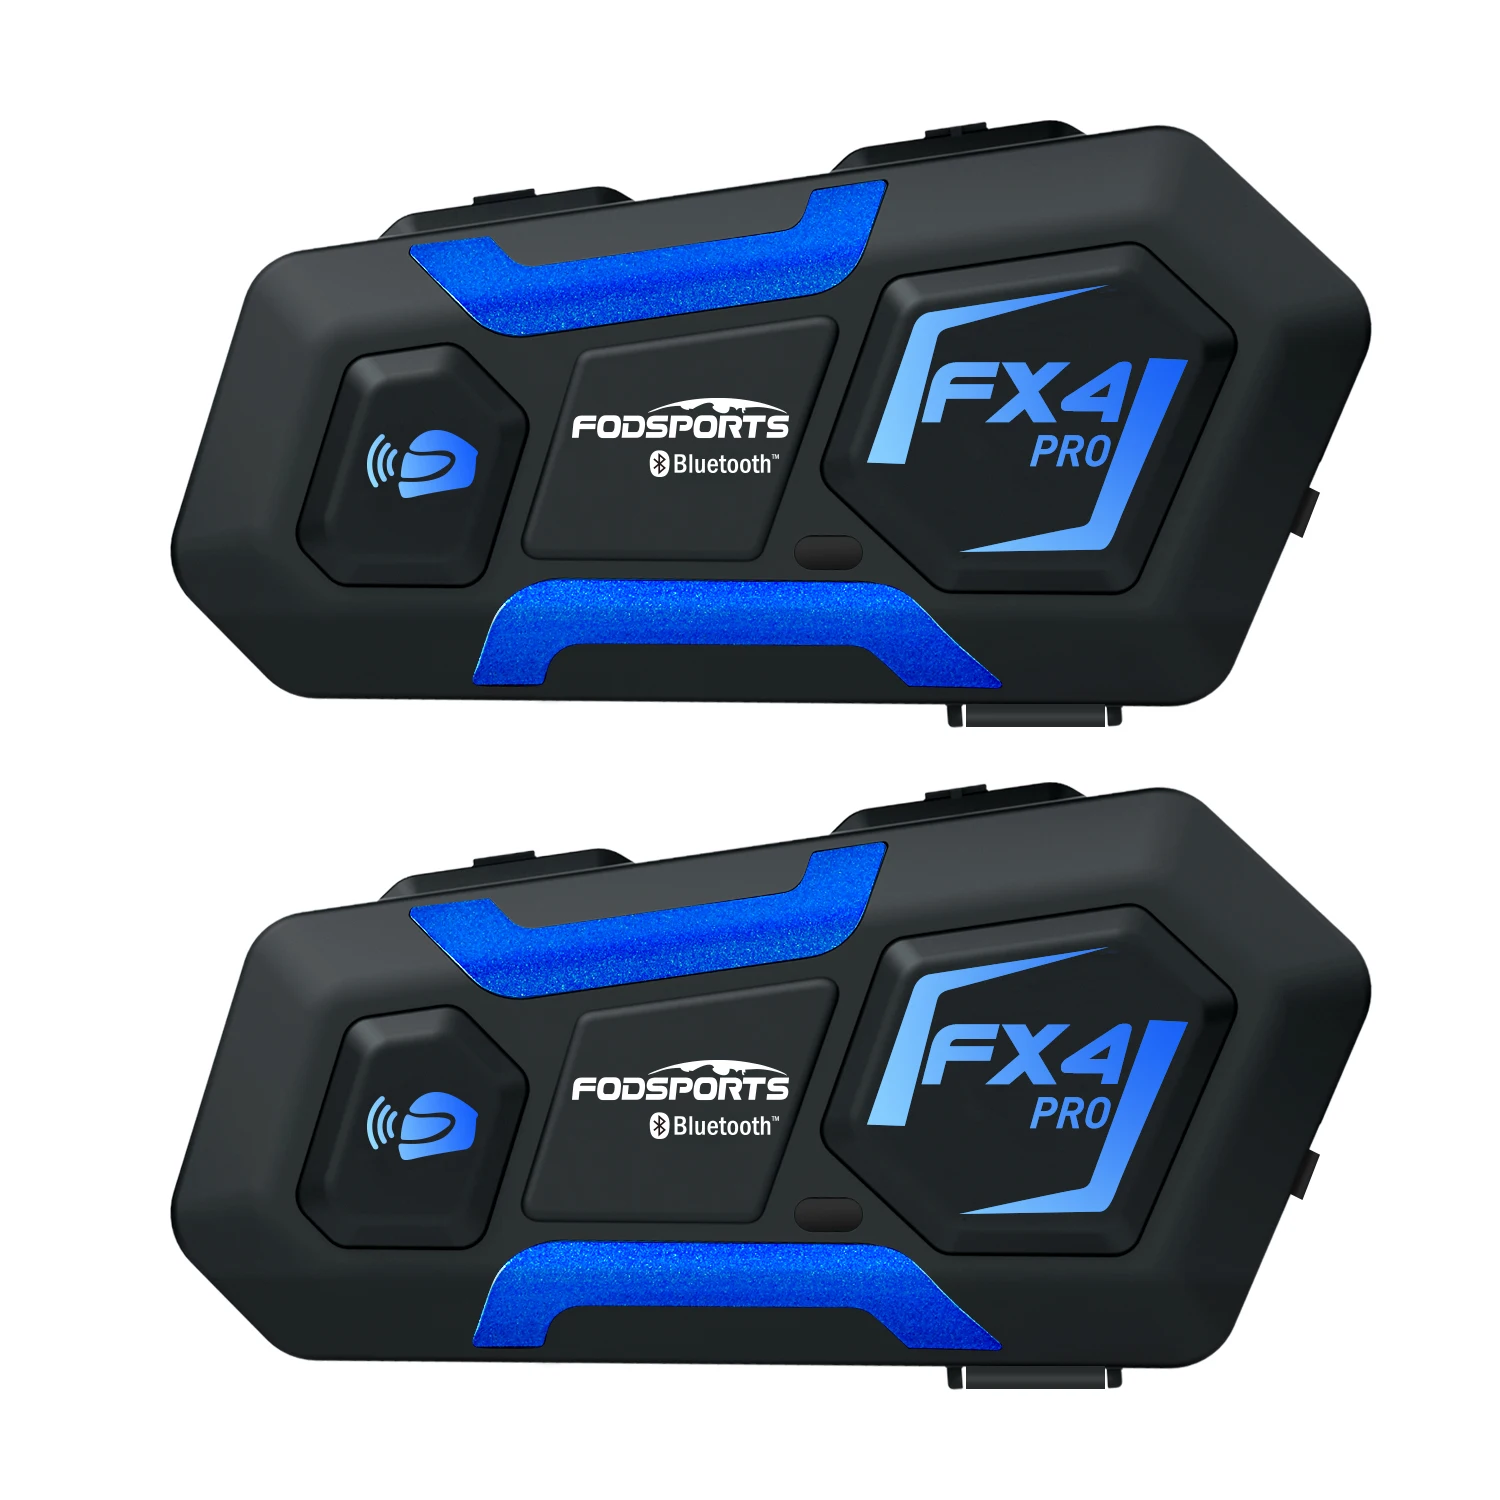 

2pcs Fodsports FX4 pro 1KM football referee intercom motorcycle communications helmet intercom